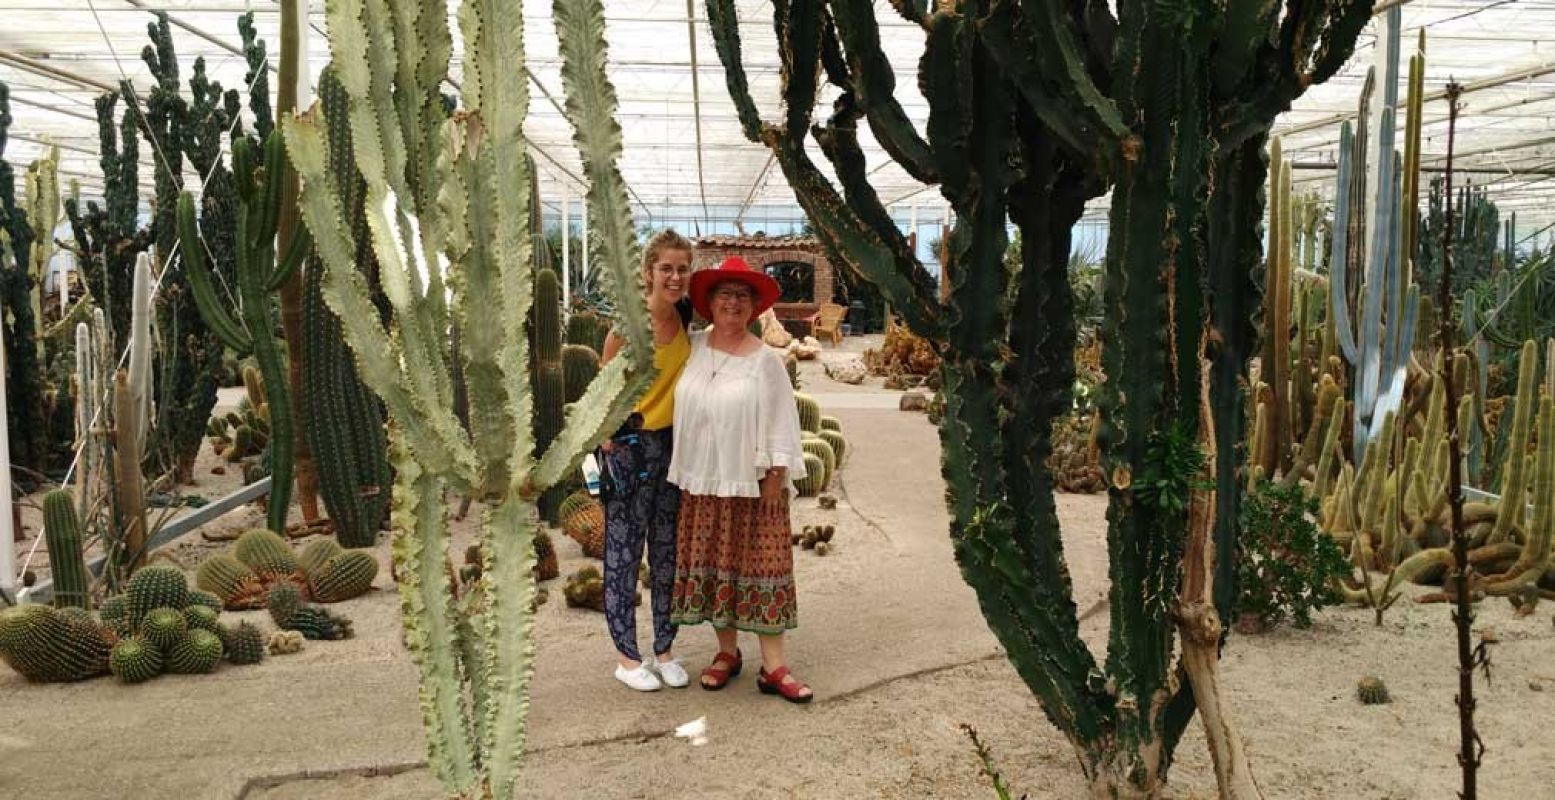 Met Anny Cactus in Belevingspark CactusOase.